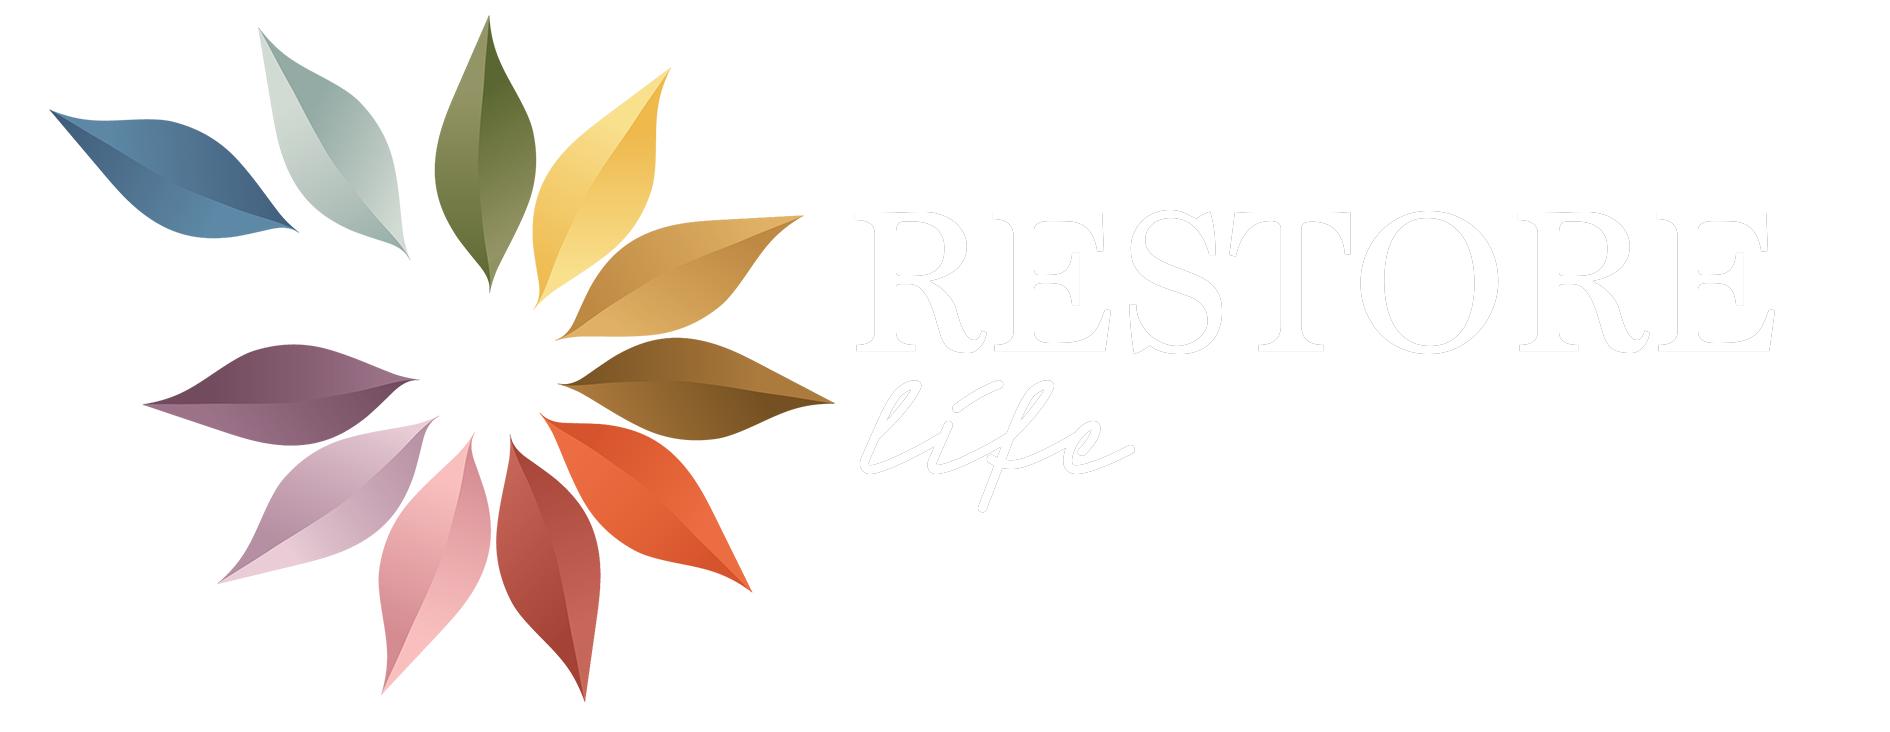 Restore Life